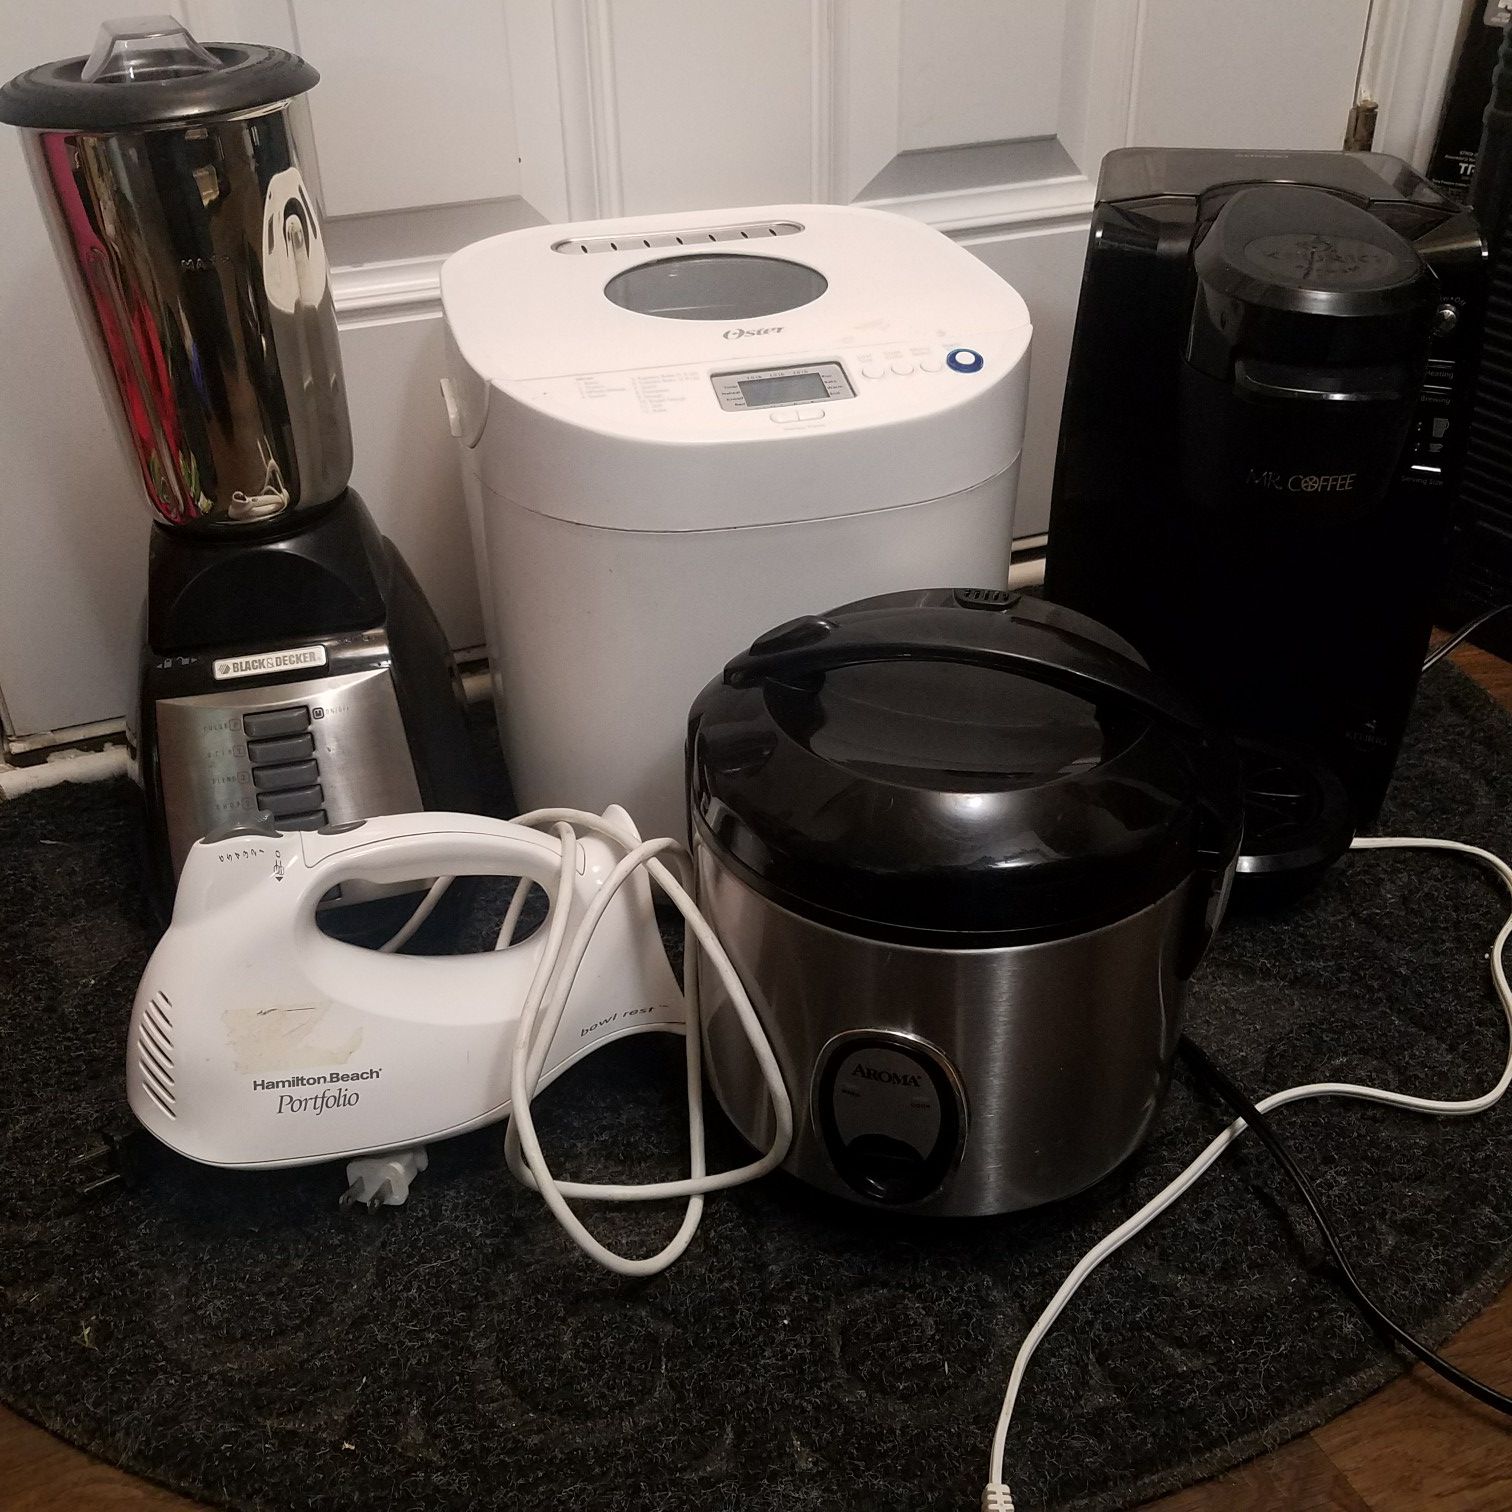 Rice cooker, blender, hand mixer, bread maker, keurig pod coffee maker